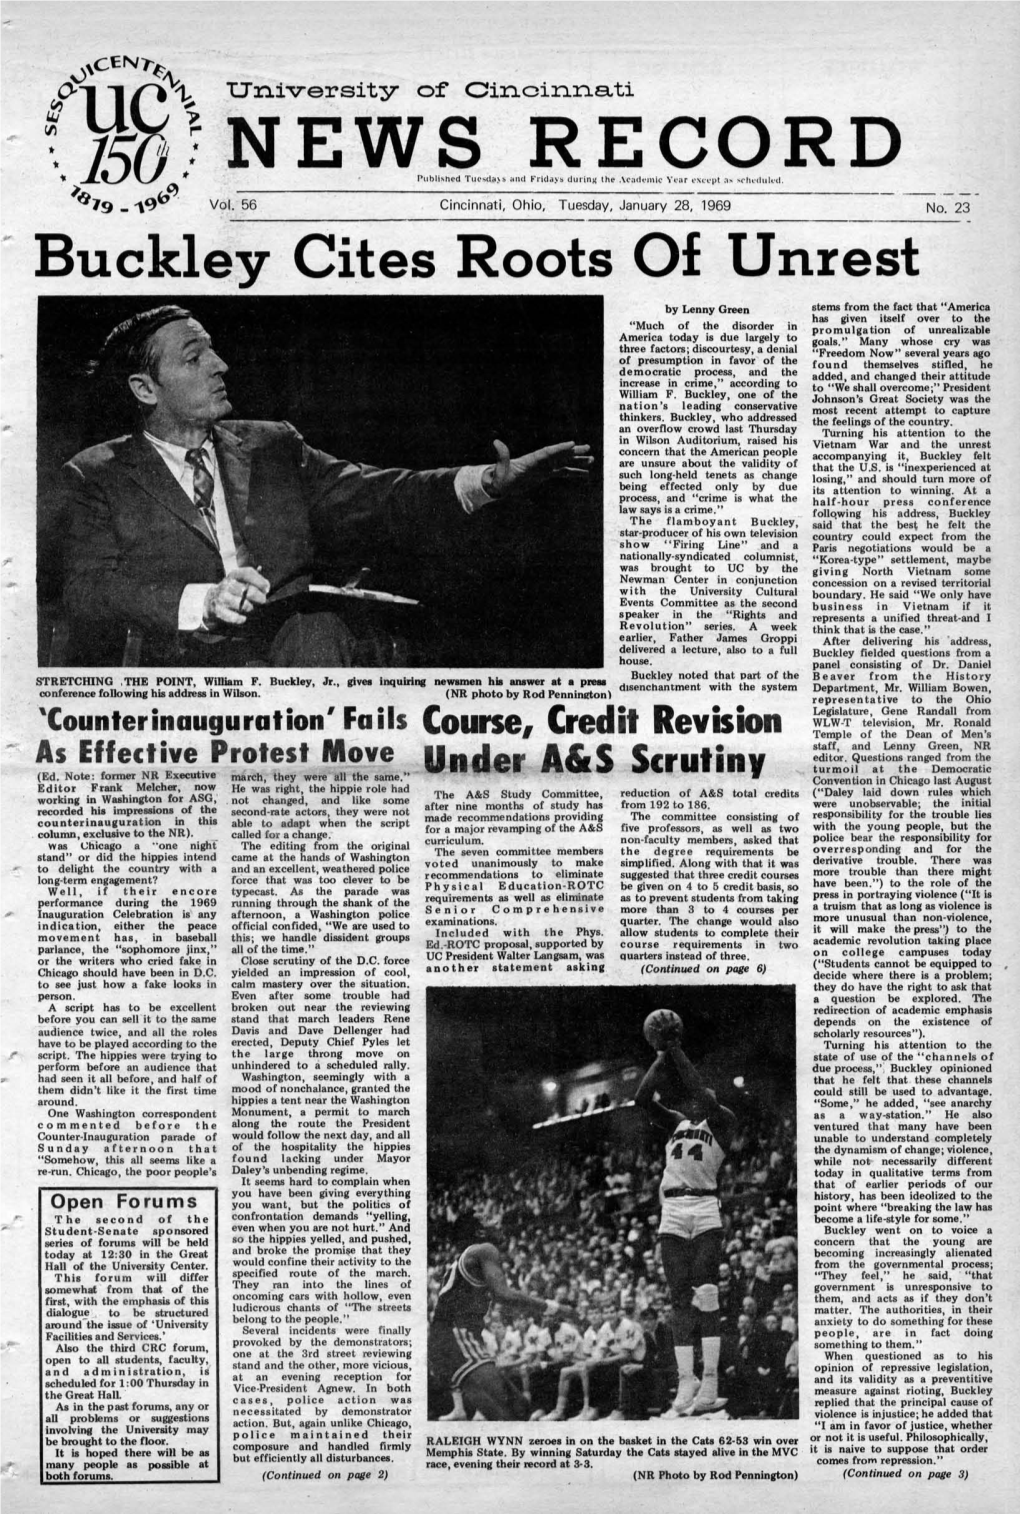 University of Cincinnati News Record. Tuesday, January 28, 1969. Vol